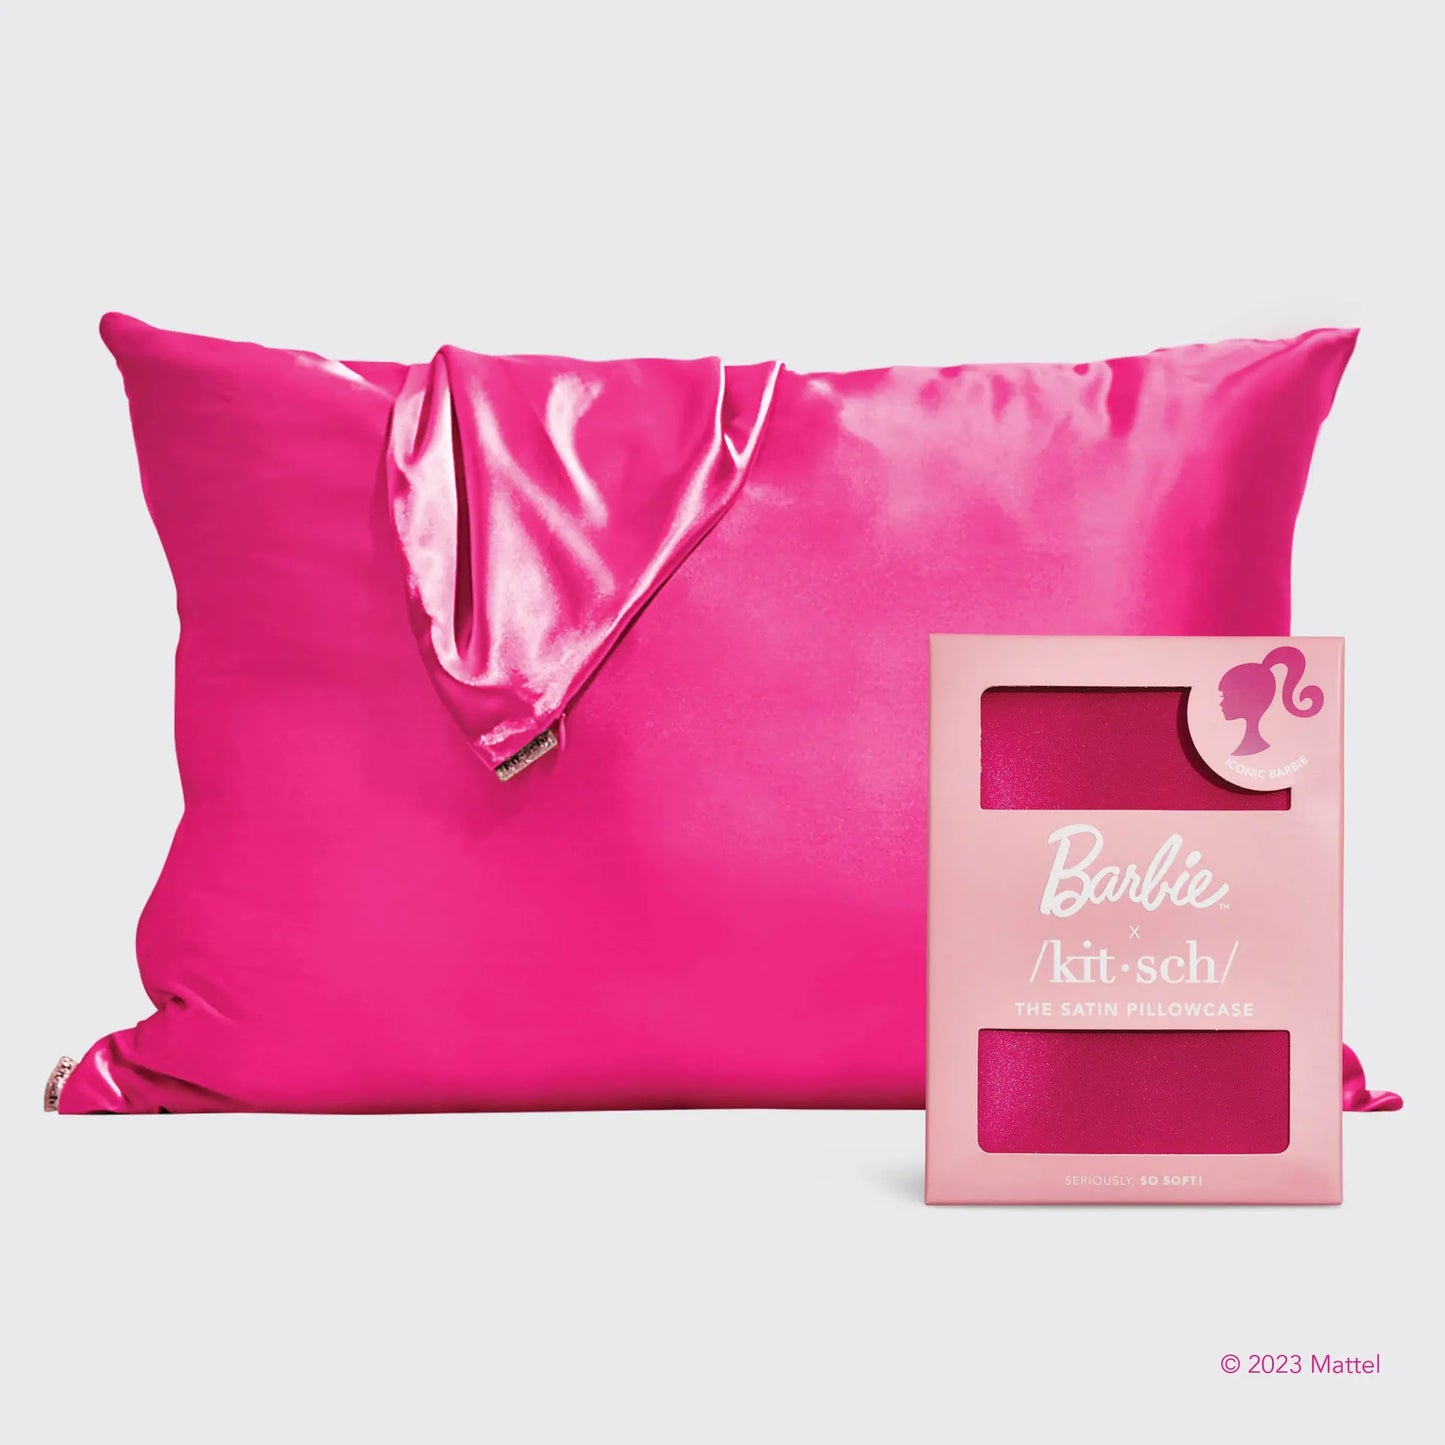 /KITSCH/ Barbie x kitsch Satin Pillowcase